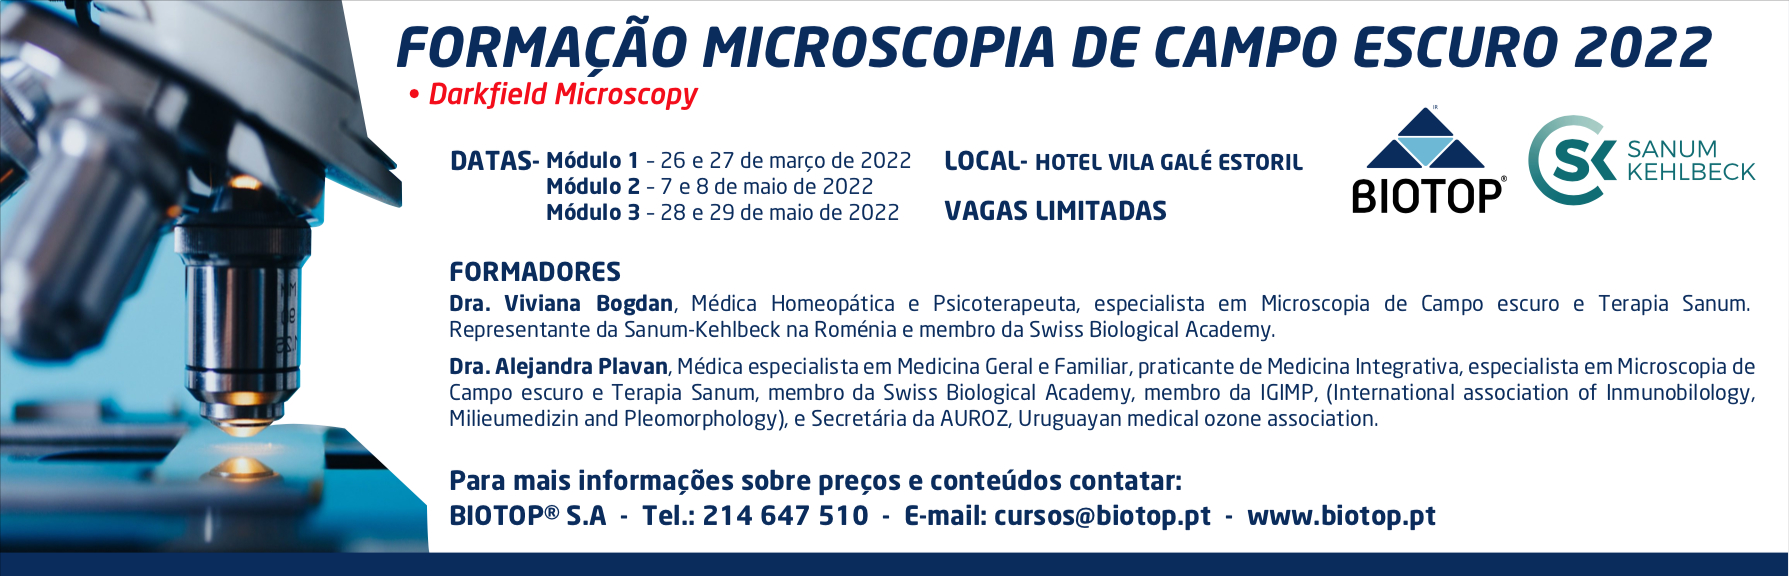 Curso Microscopia de Campo escuro 2022 Módulos 1, 2 e 3 Biotop